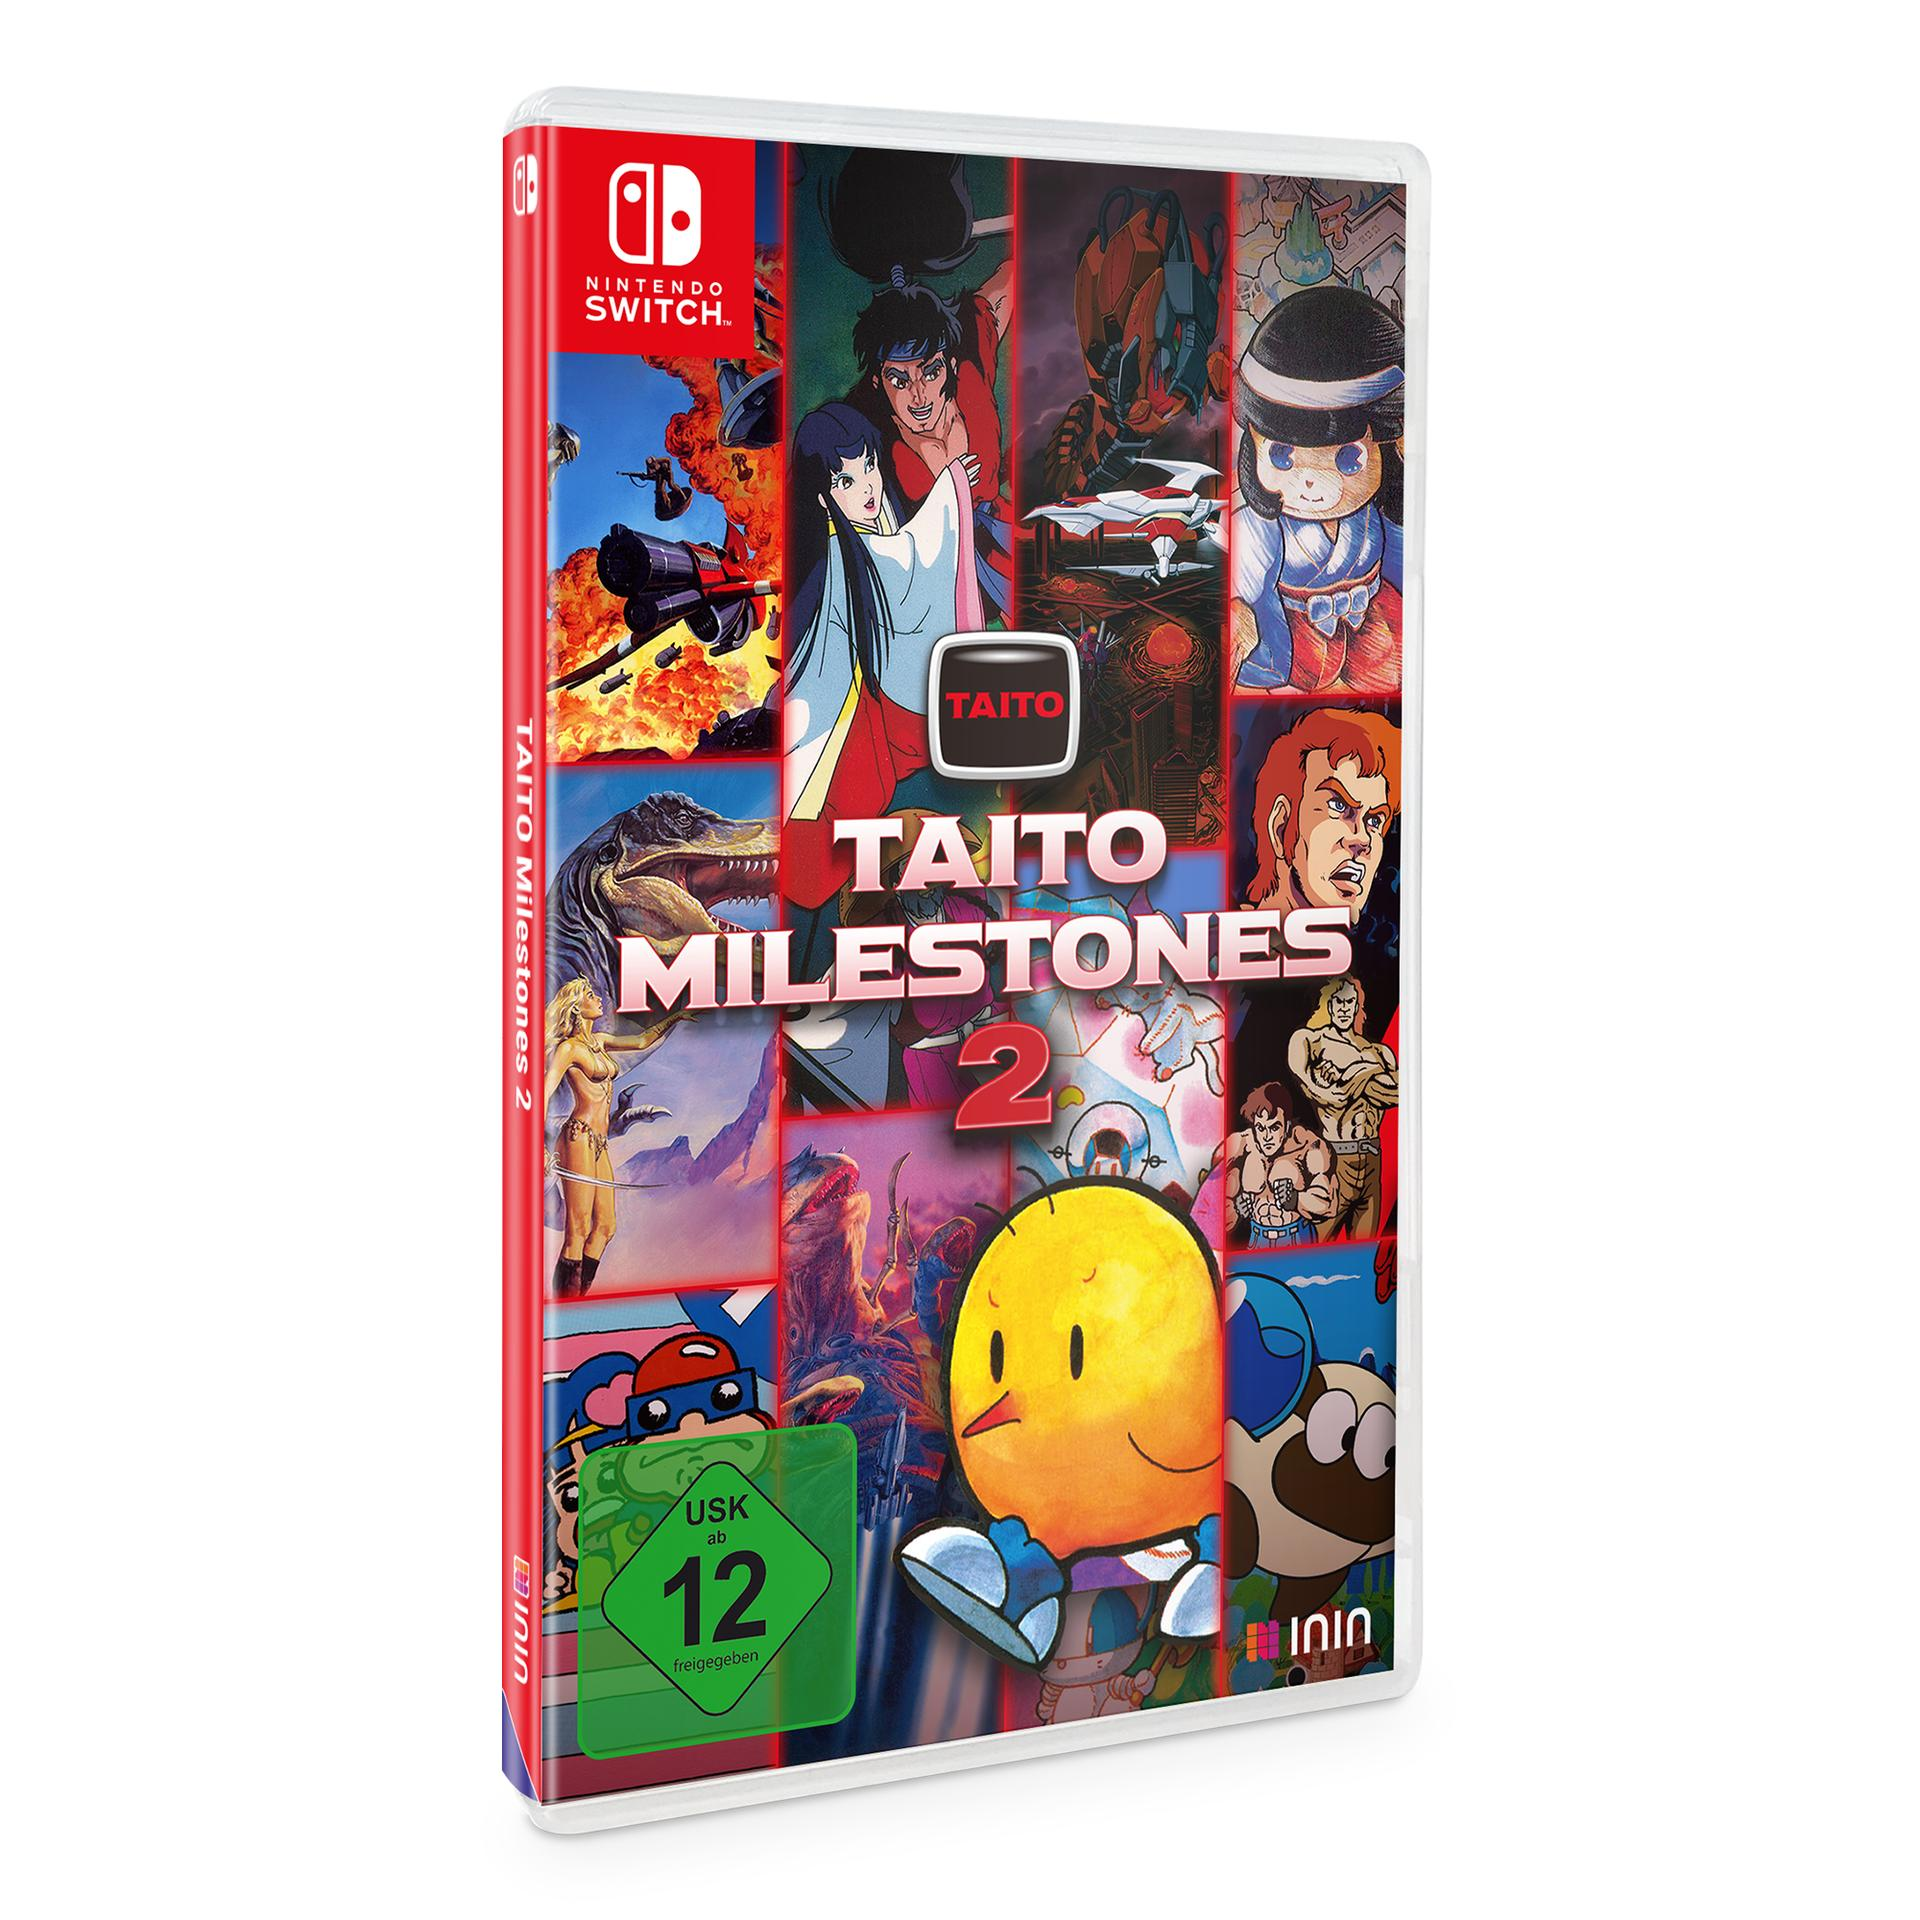 Switch] 2 - [Nintendo Milestones Taito